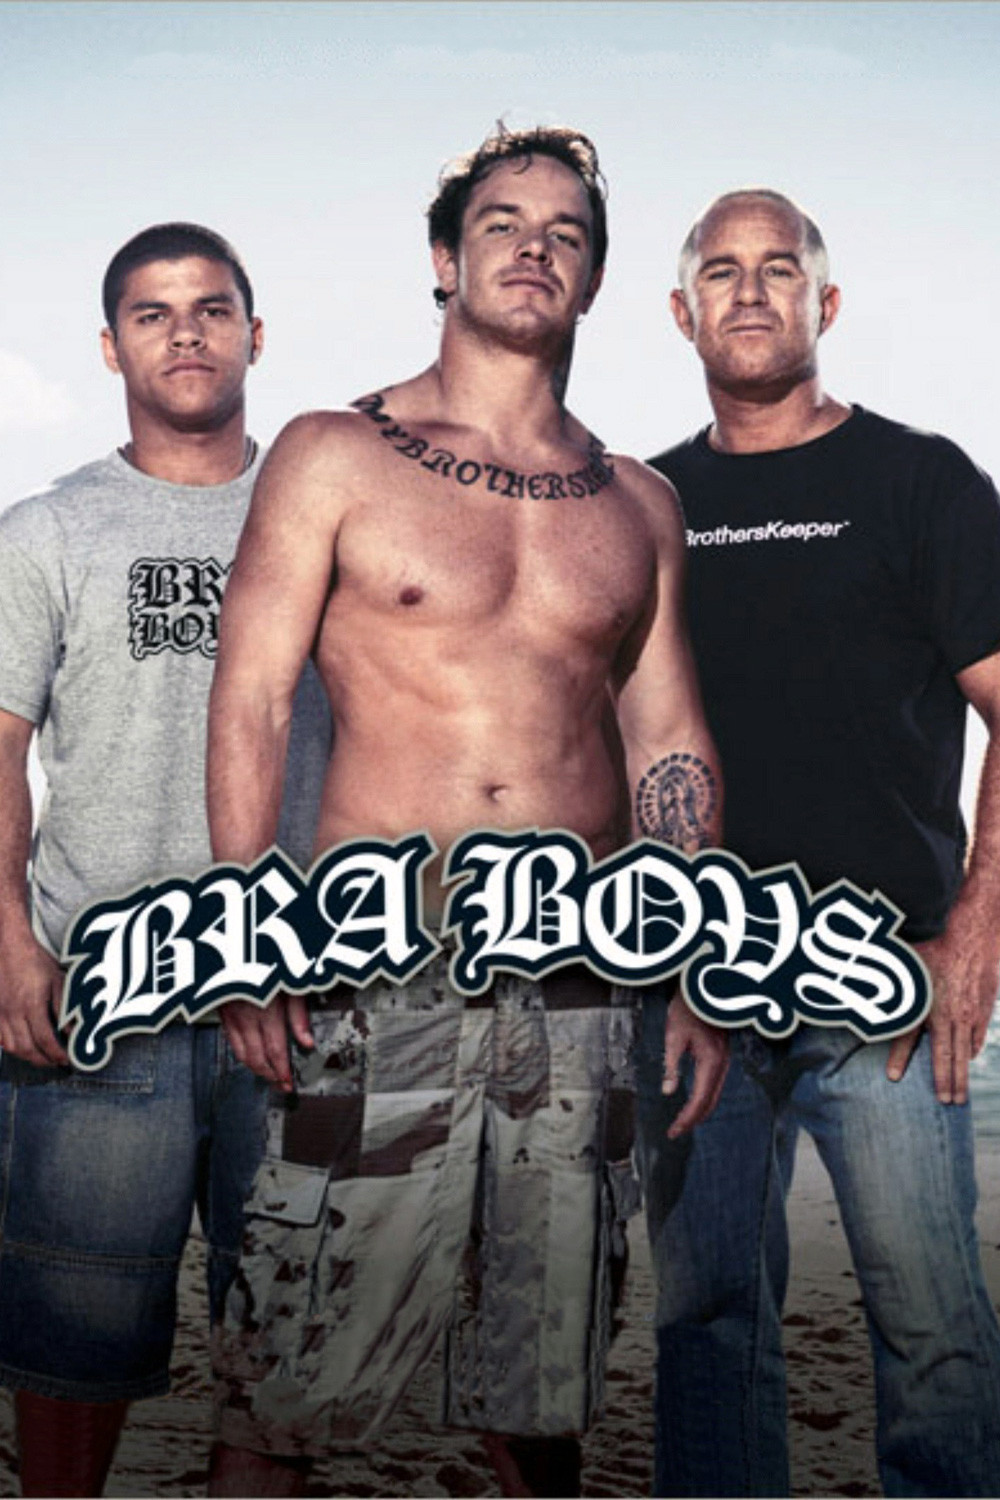 Poster for the movie "Bra Boys"